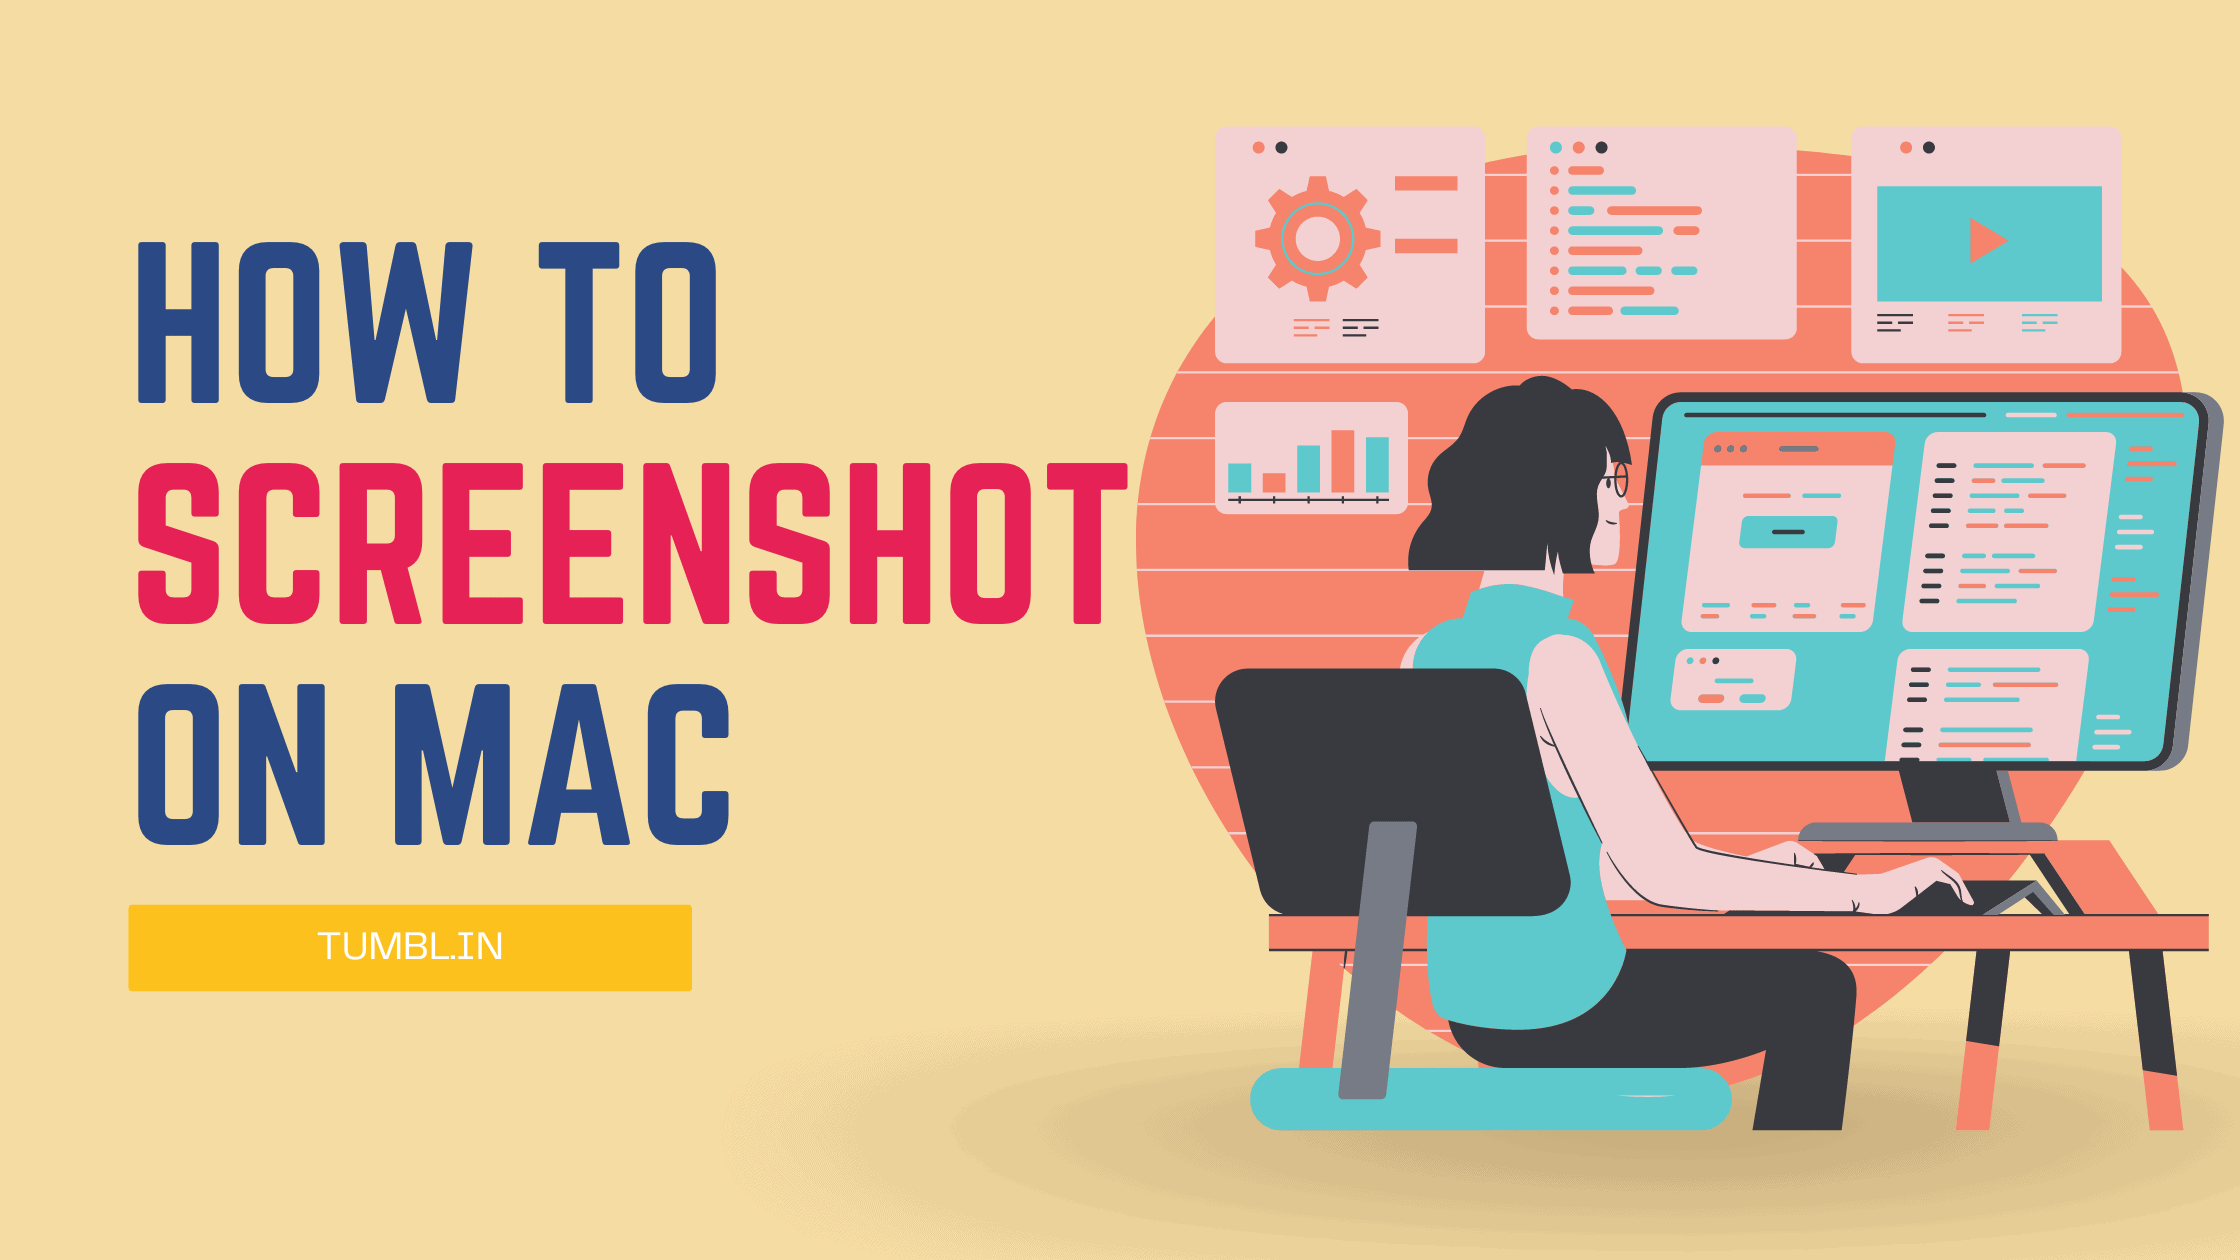 How to Screenshot on Mac